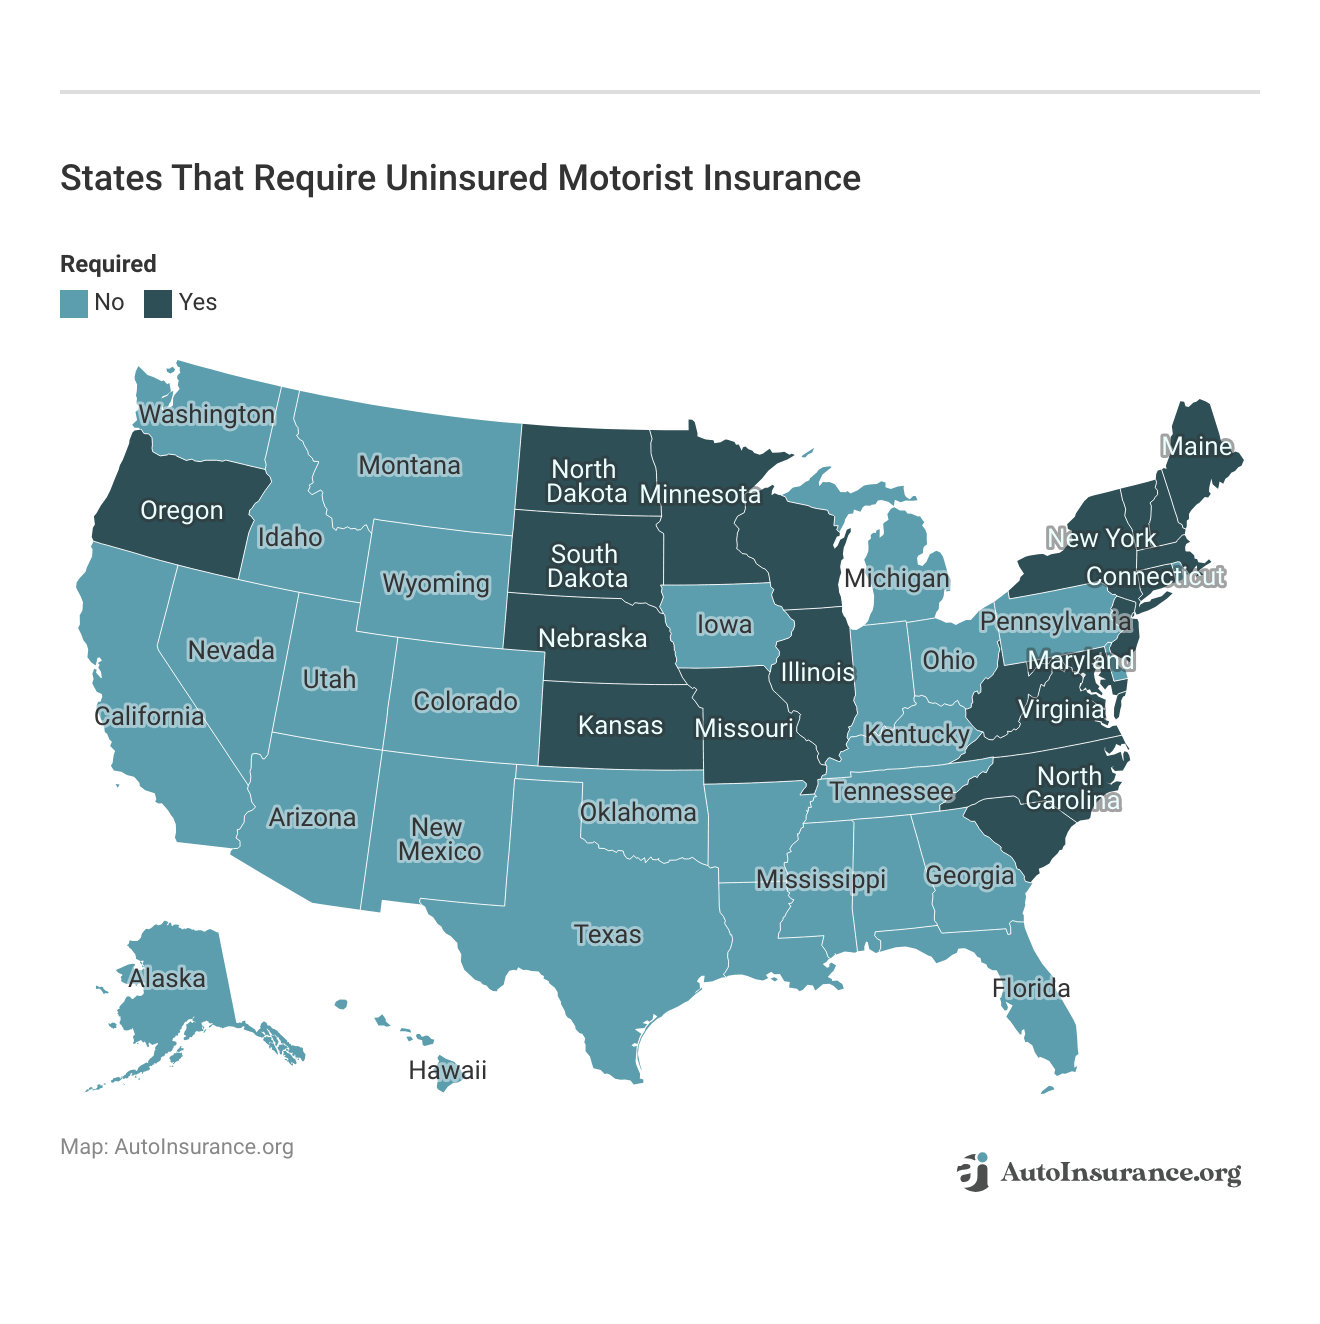 <h3>States That Require Uninsured Motorist Insurance</h3>